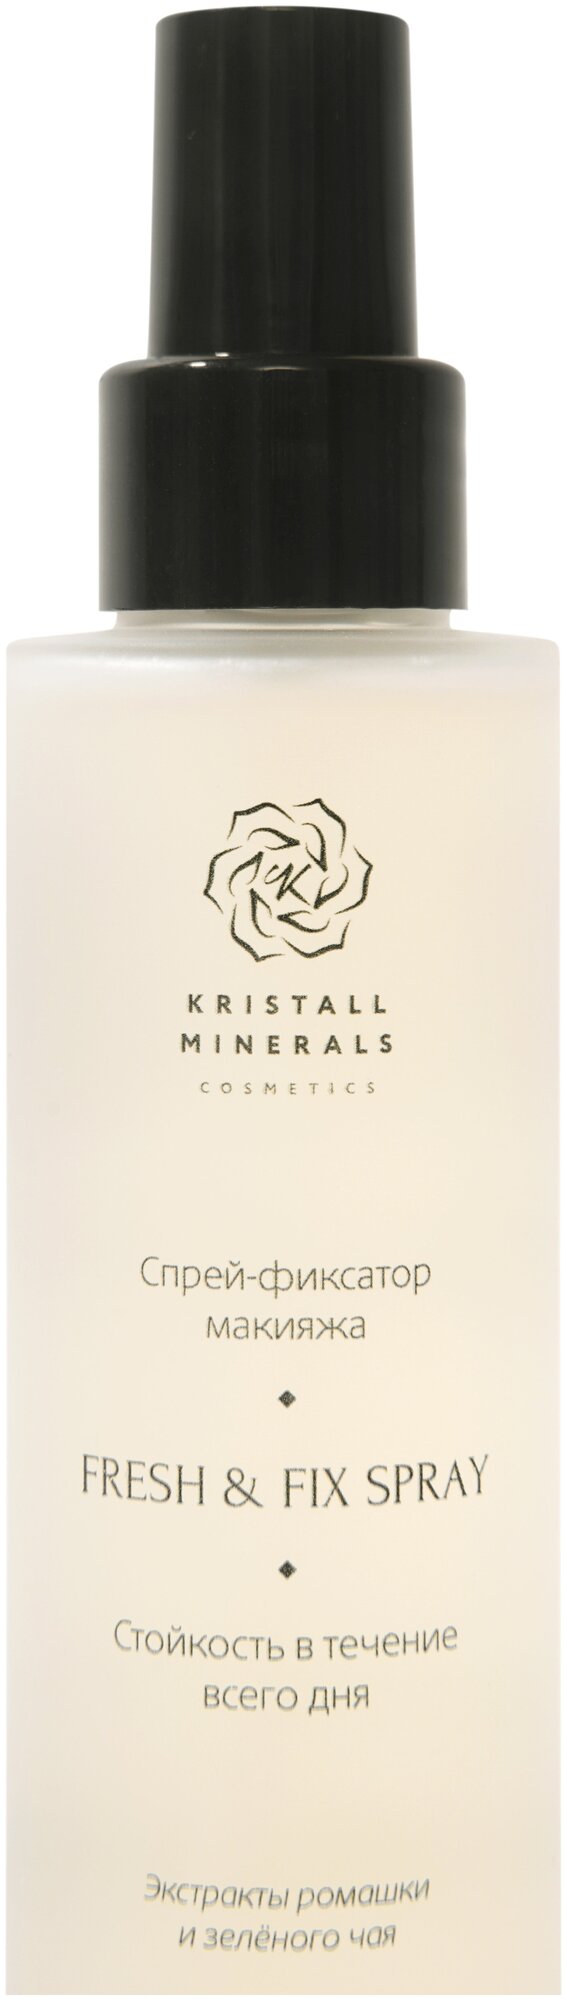 Спрей-фиксатор макияжа Fresh & fix spray, Kristall Minerals